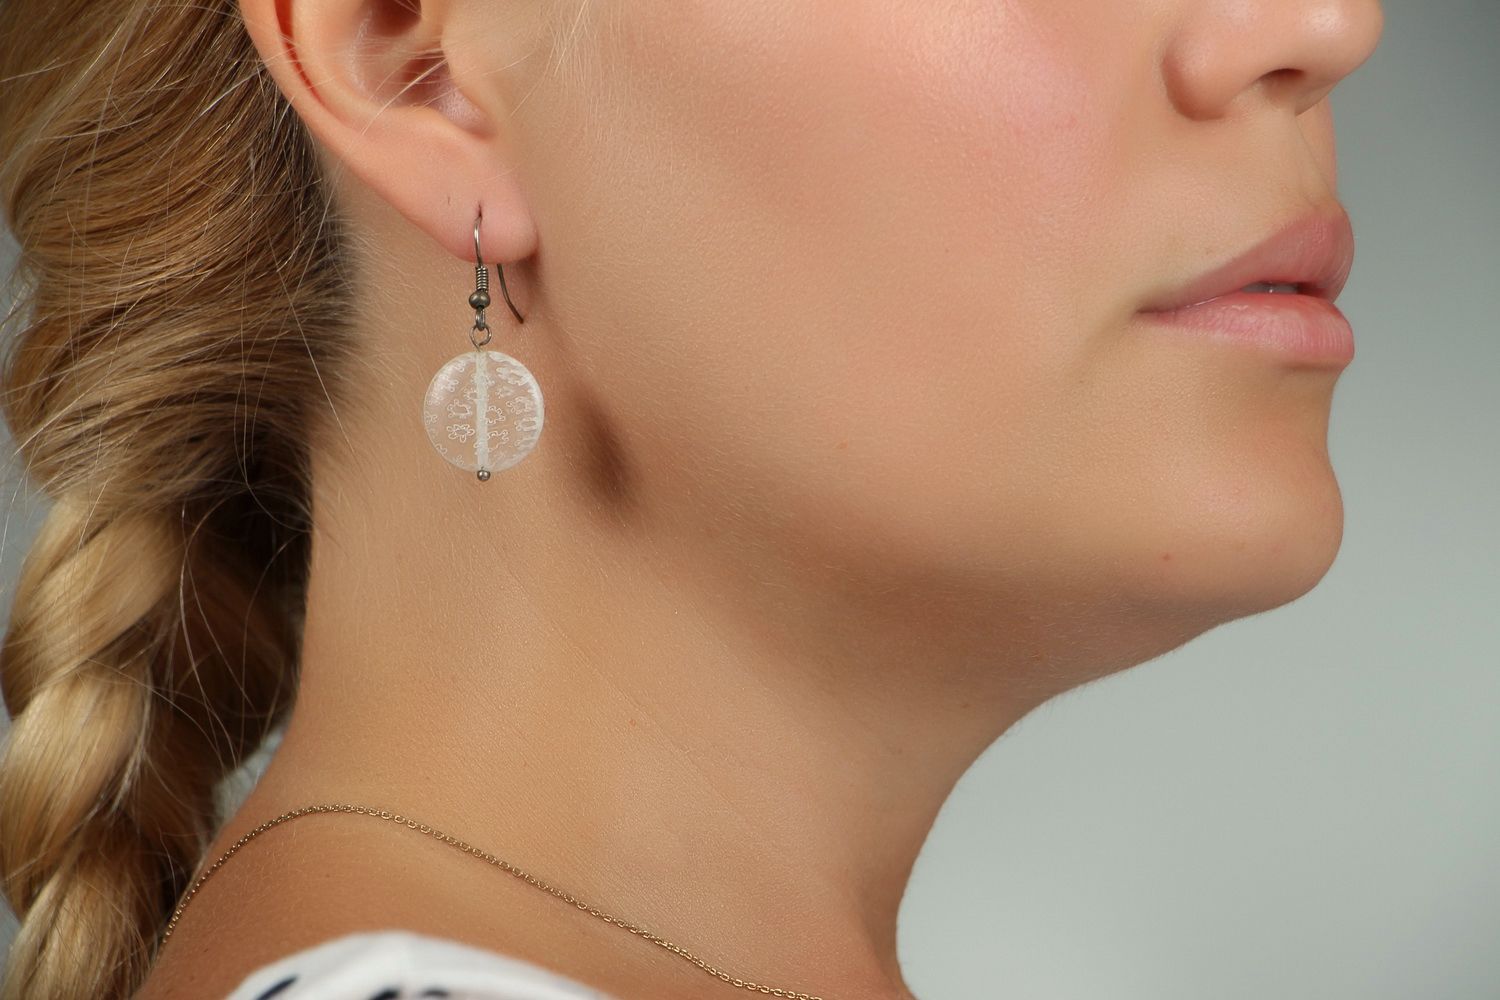 Glass earrings photo 5